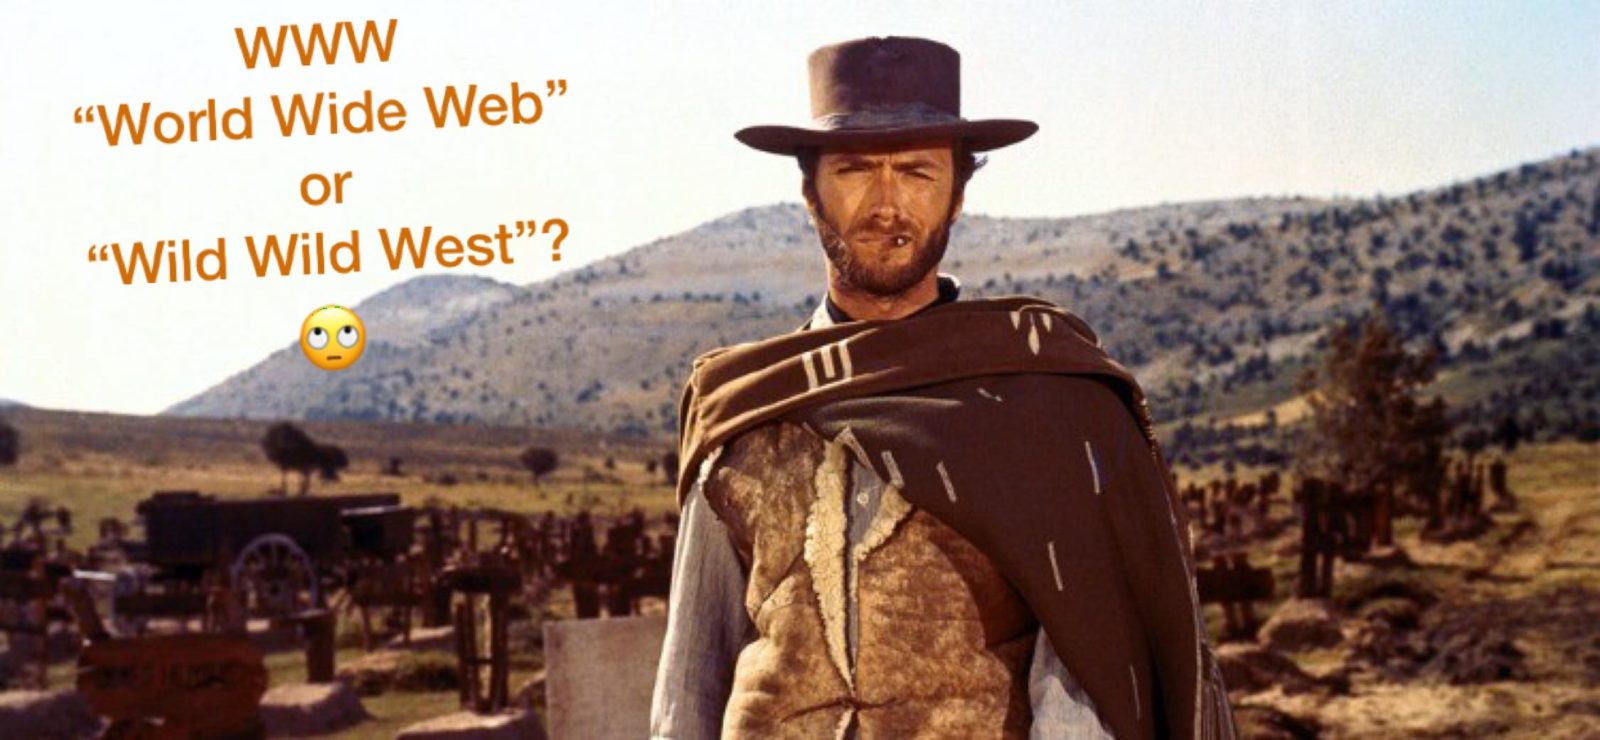 Www World Wide Web Or Wild Wild West Bayou Web Design